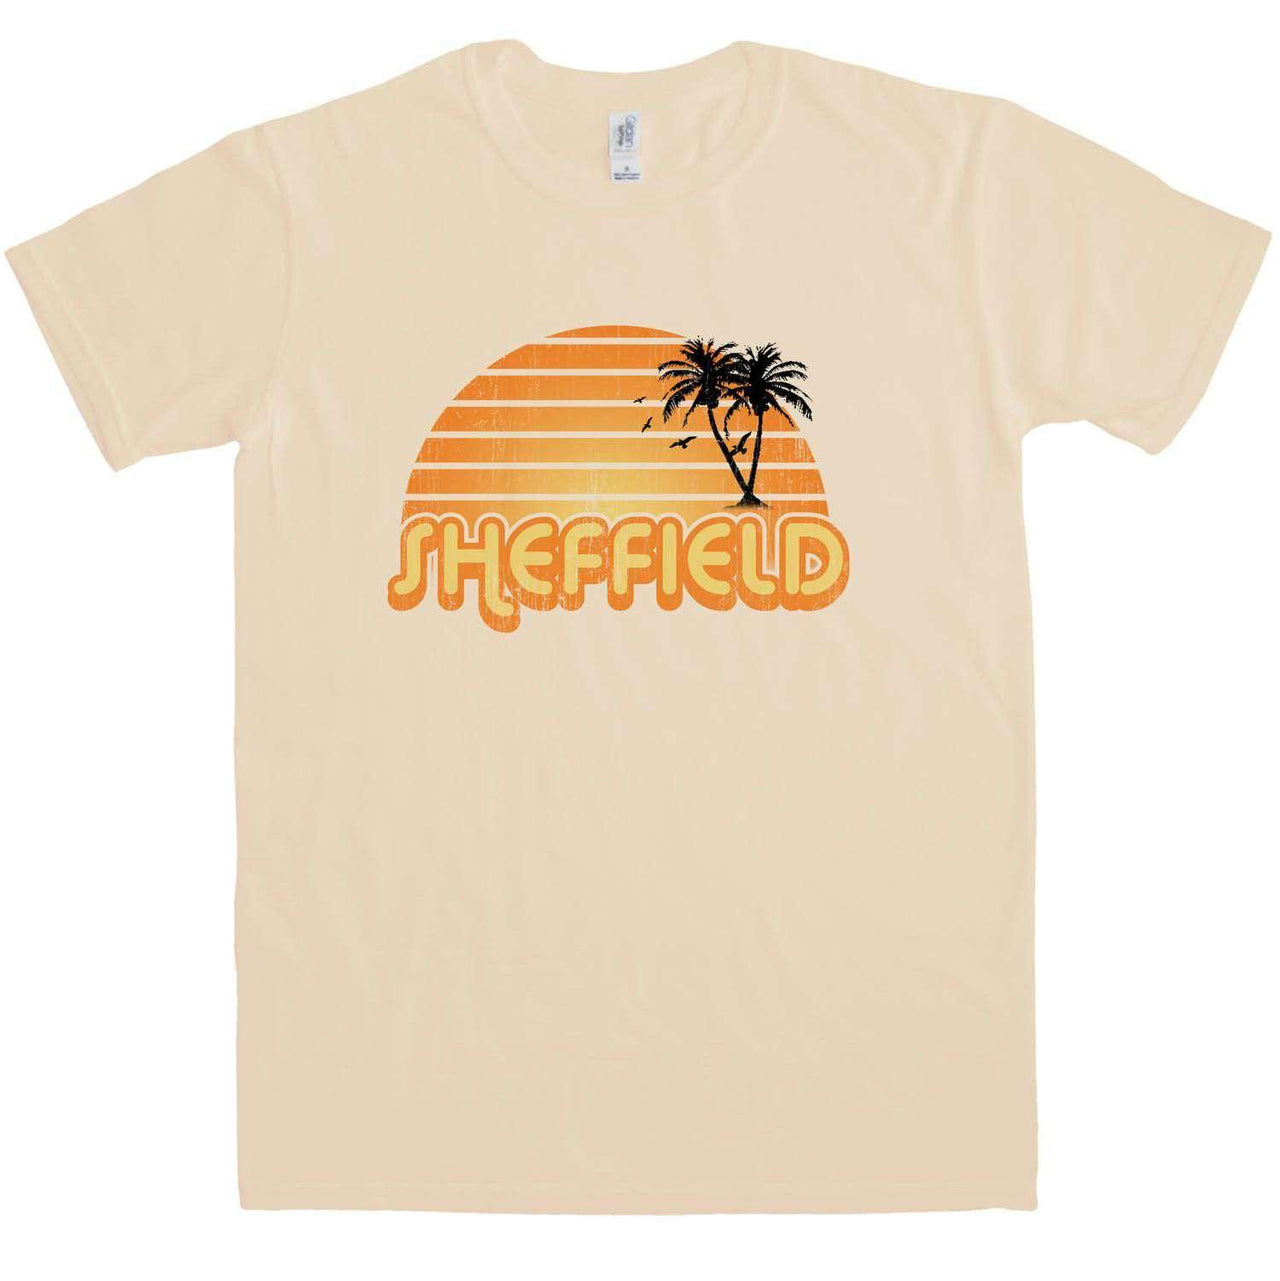 City Sunset Sheffield T-Shirt For Men 8Ball